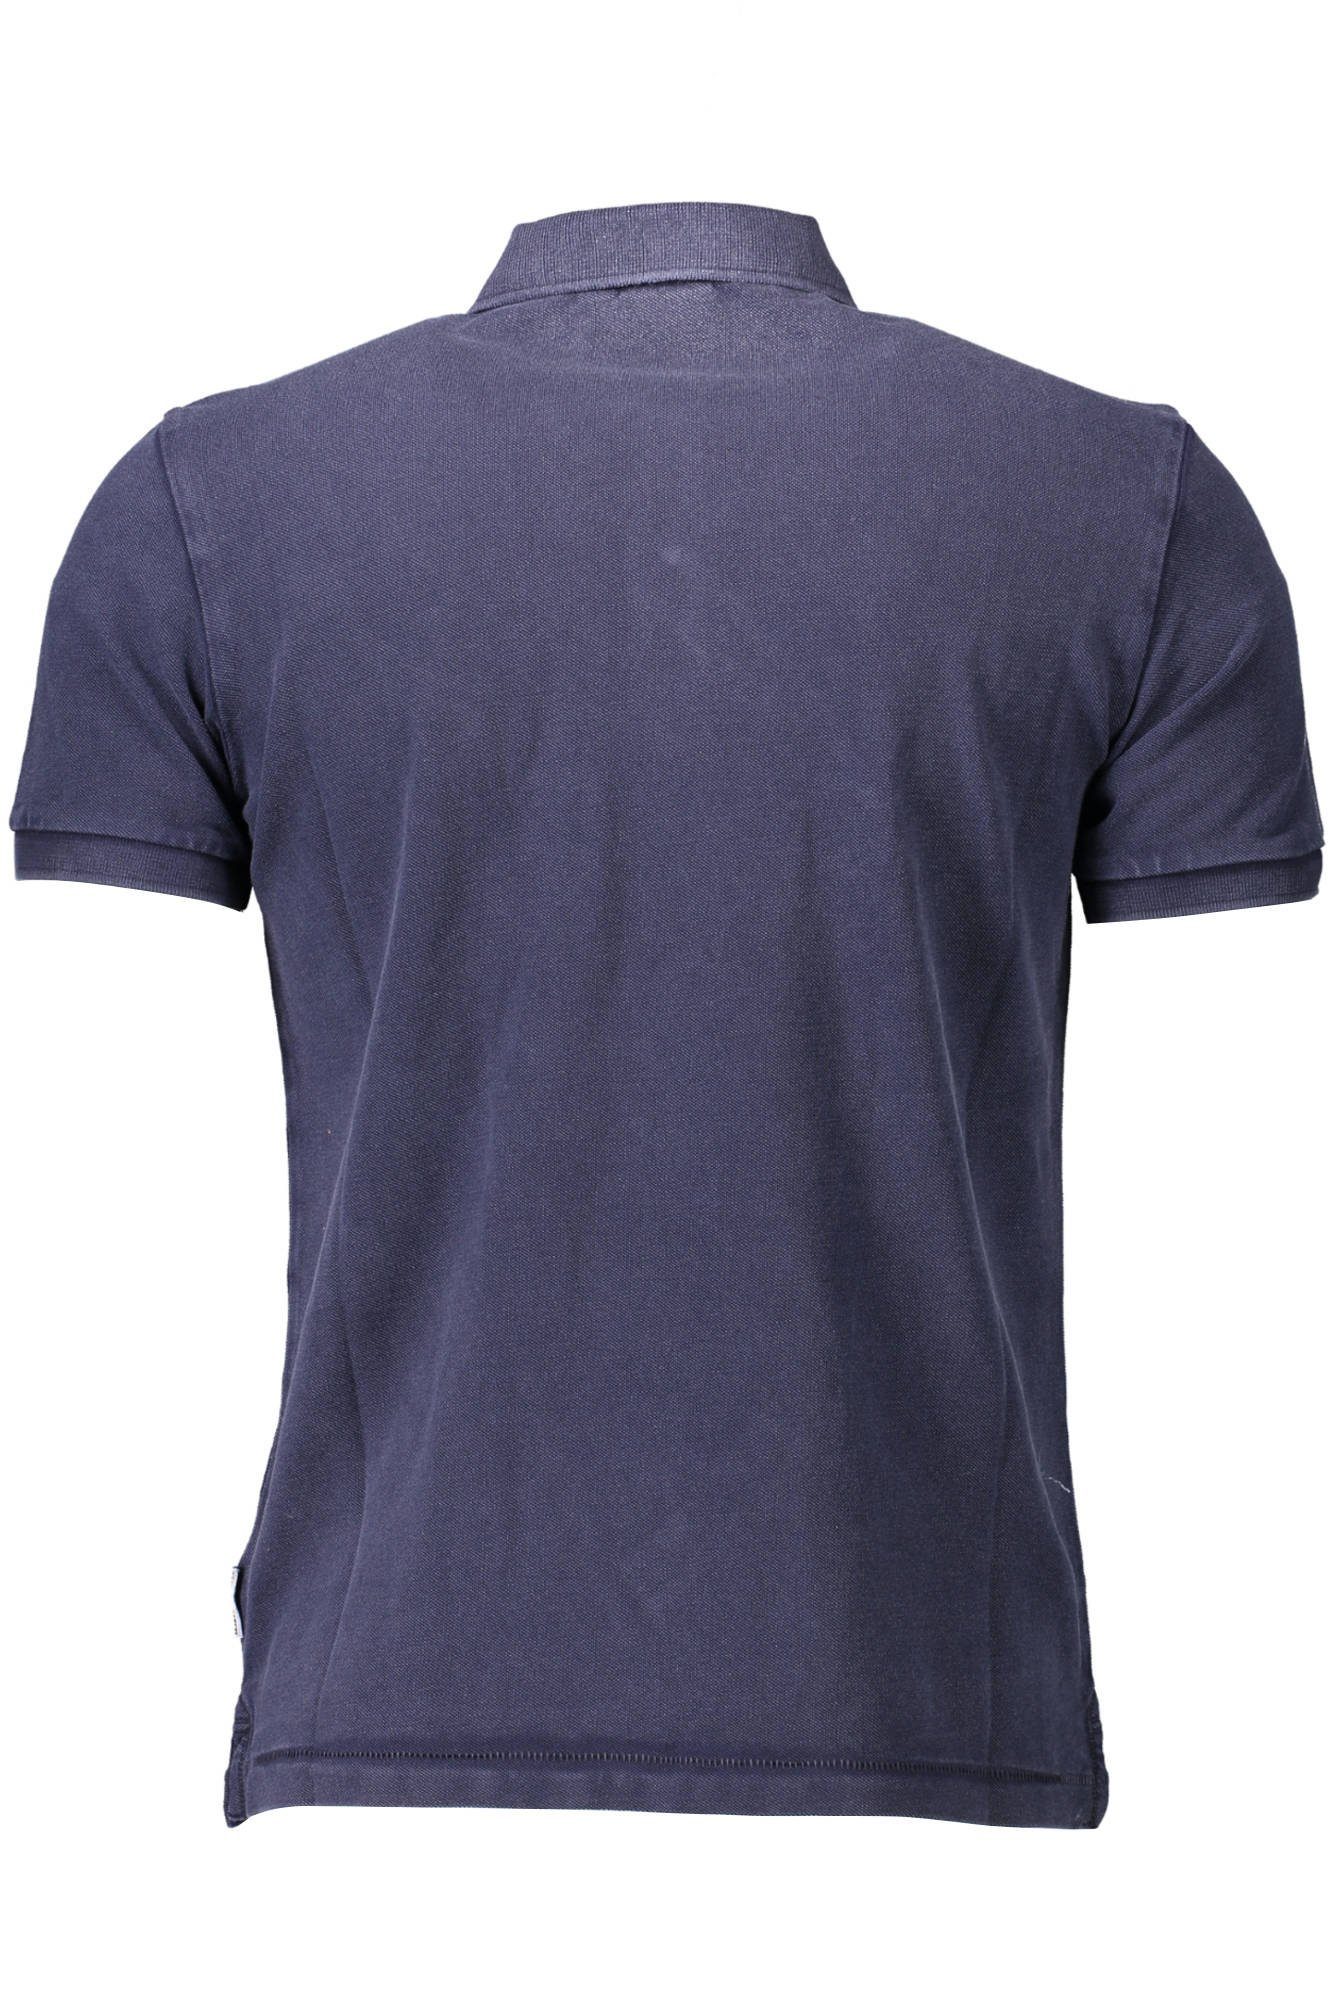 Napapijri Poloshirt kurzarm, Napapijri marine) Knöpfen Herren (176 Polohemd blu mit T-Shirt Poloshirt blau